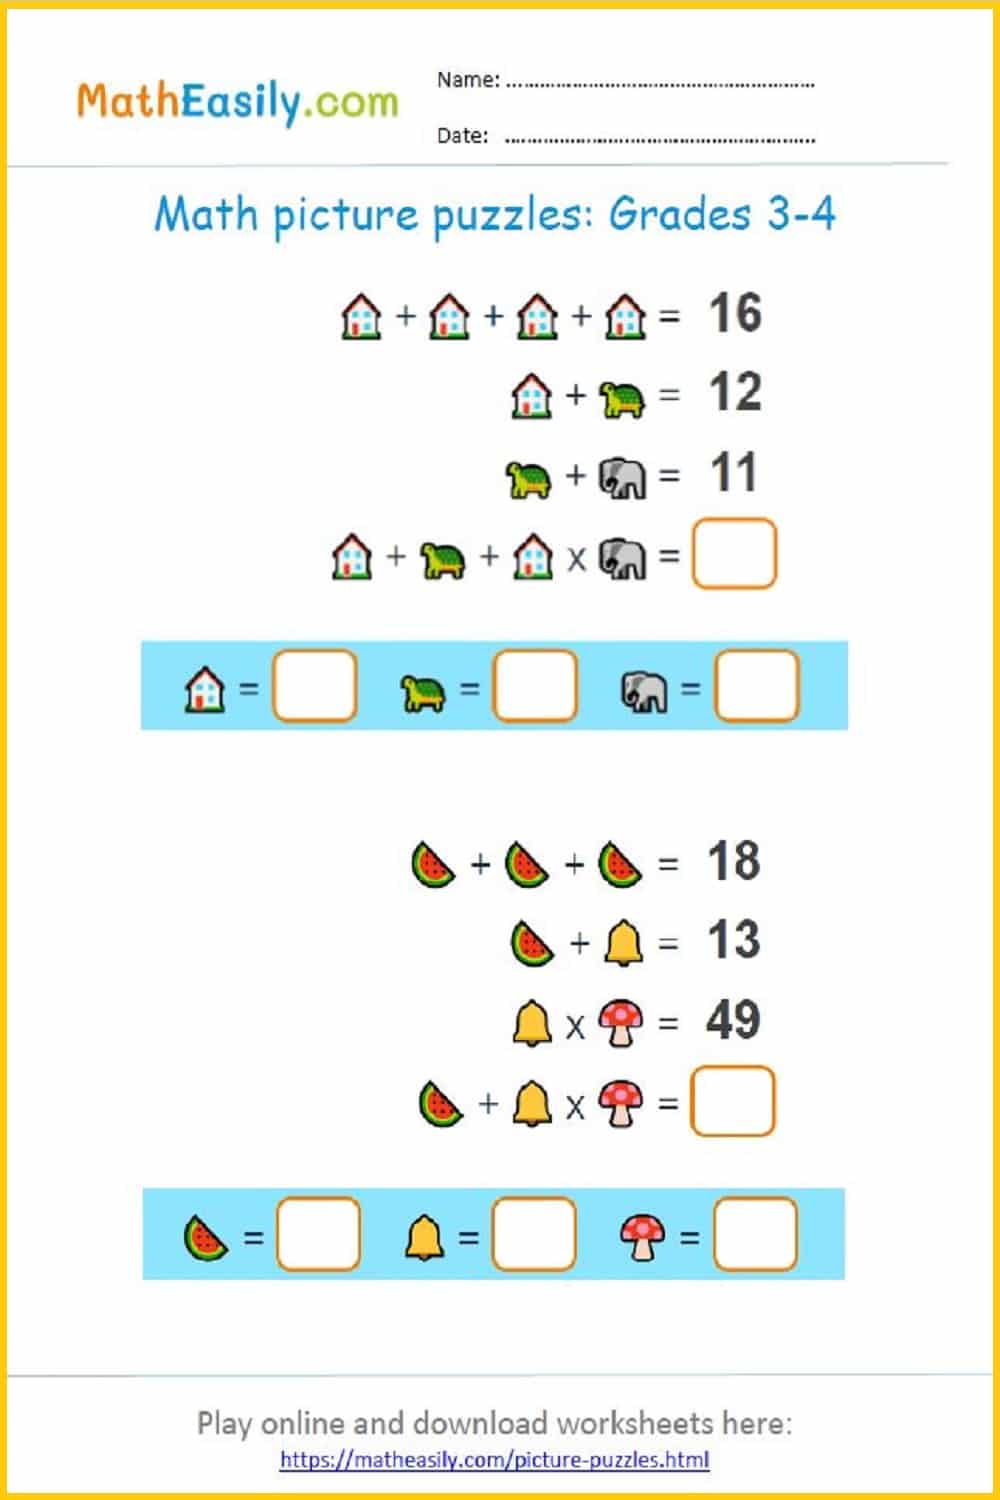 Math equation puzzle worksheet. emoji logic puzzles pdf. emoji logic puzzles pdf. Maths picture puzzles with answers PDF download. 
emoji maths puzzles with answers.